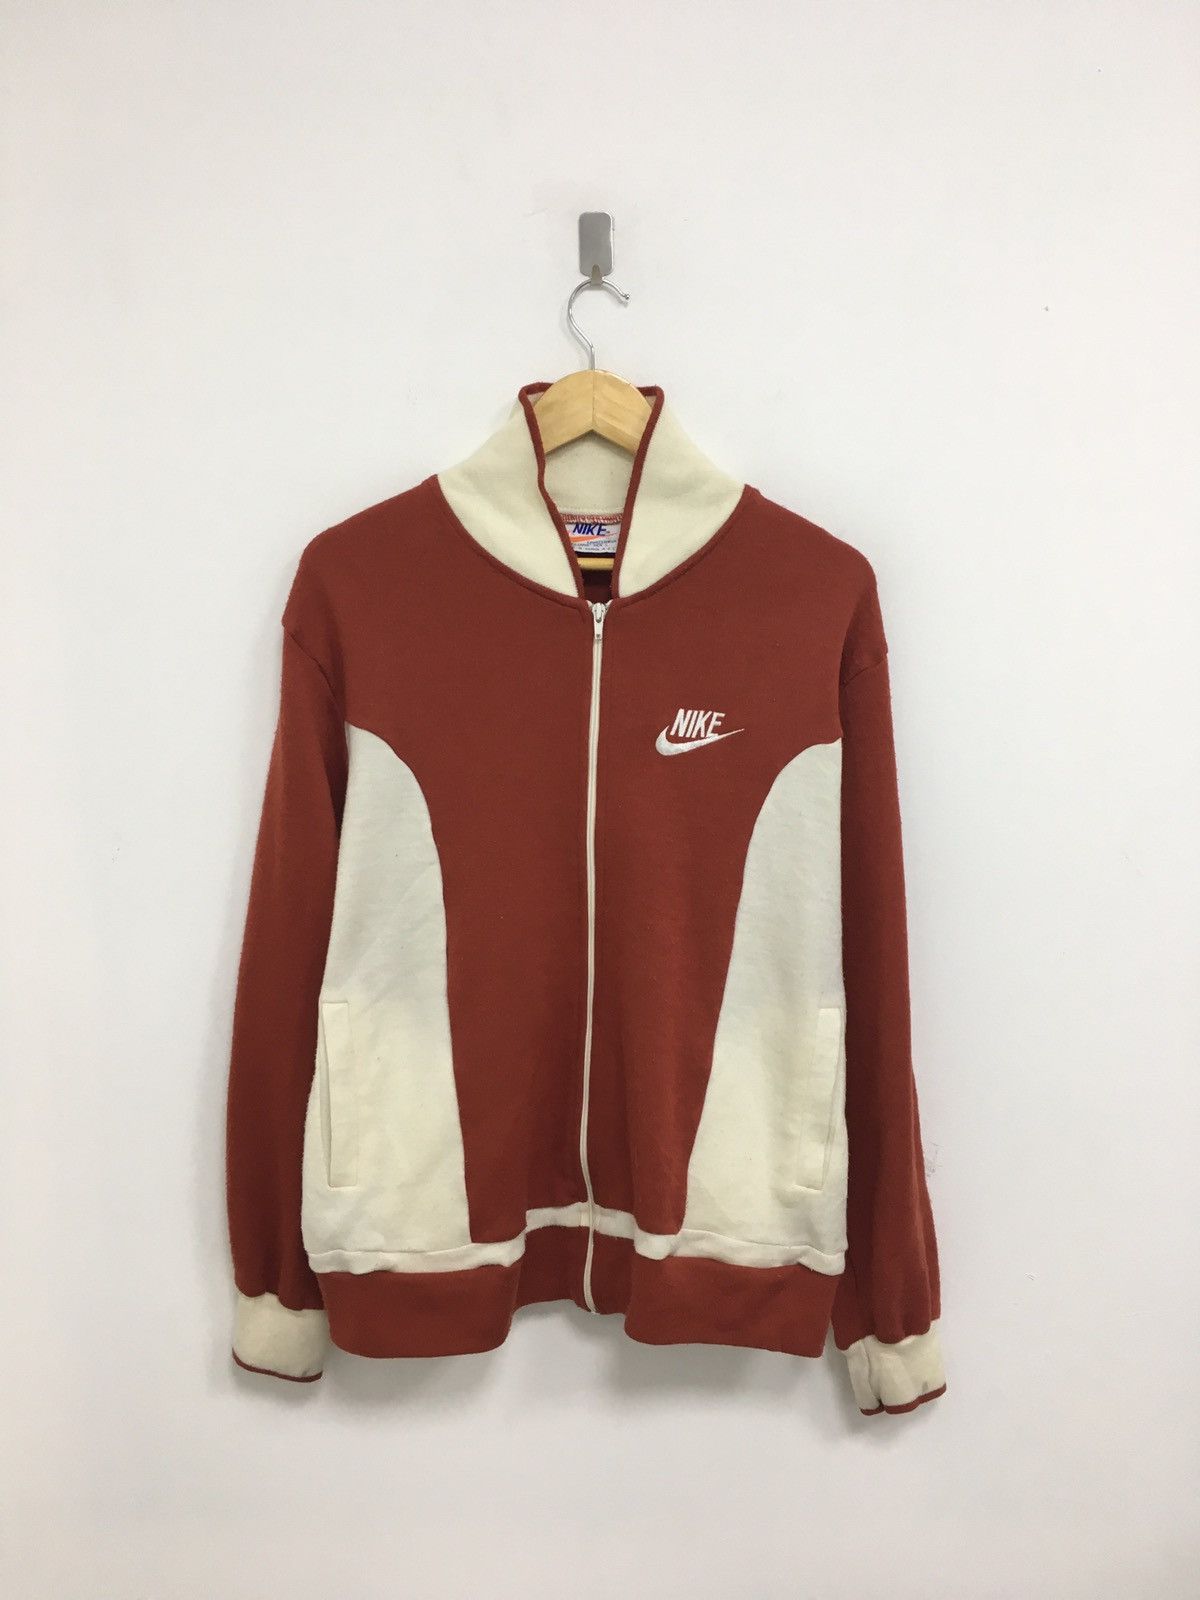 uniek bros controleren Nike Nike Vintage Jacket nice colourway made in taiwan roc | Grailed